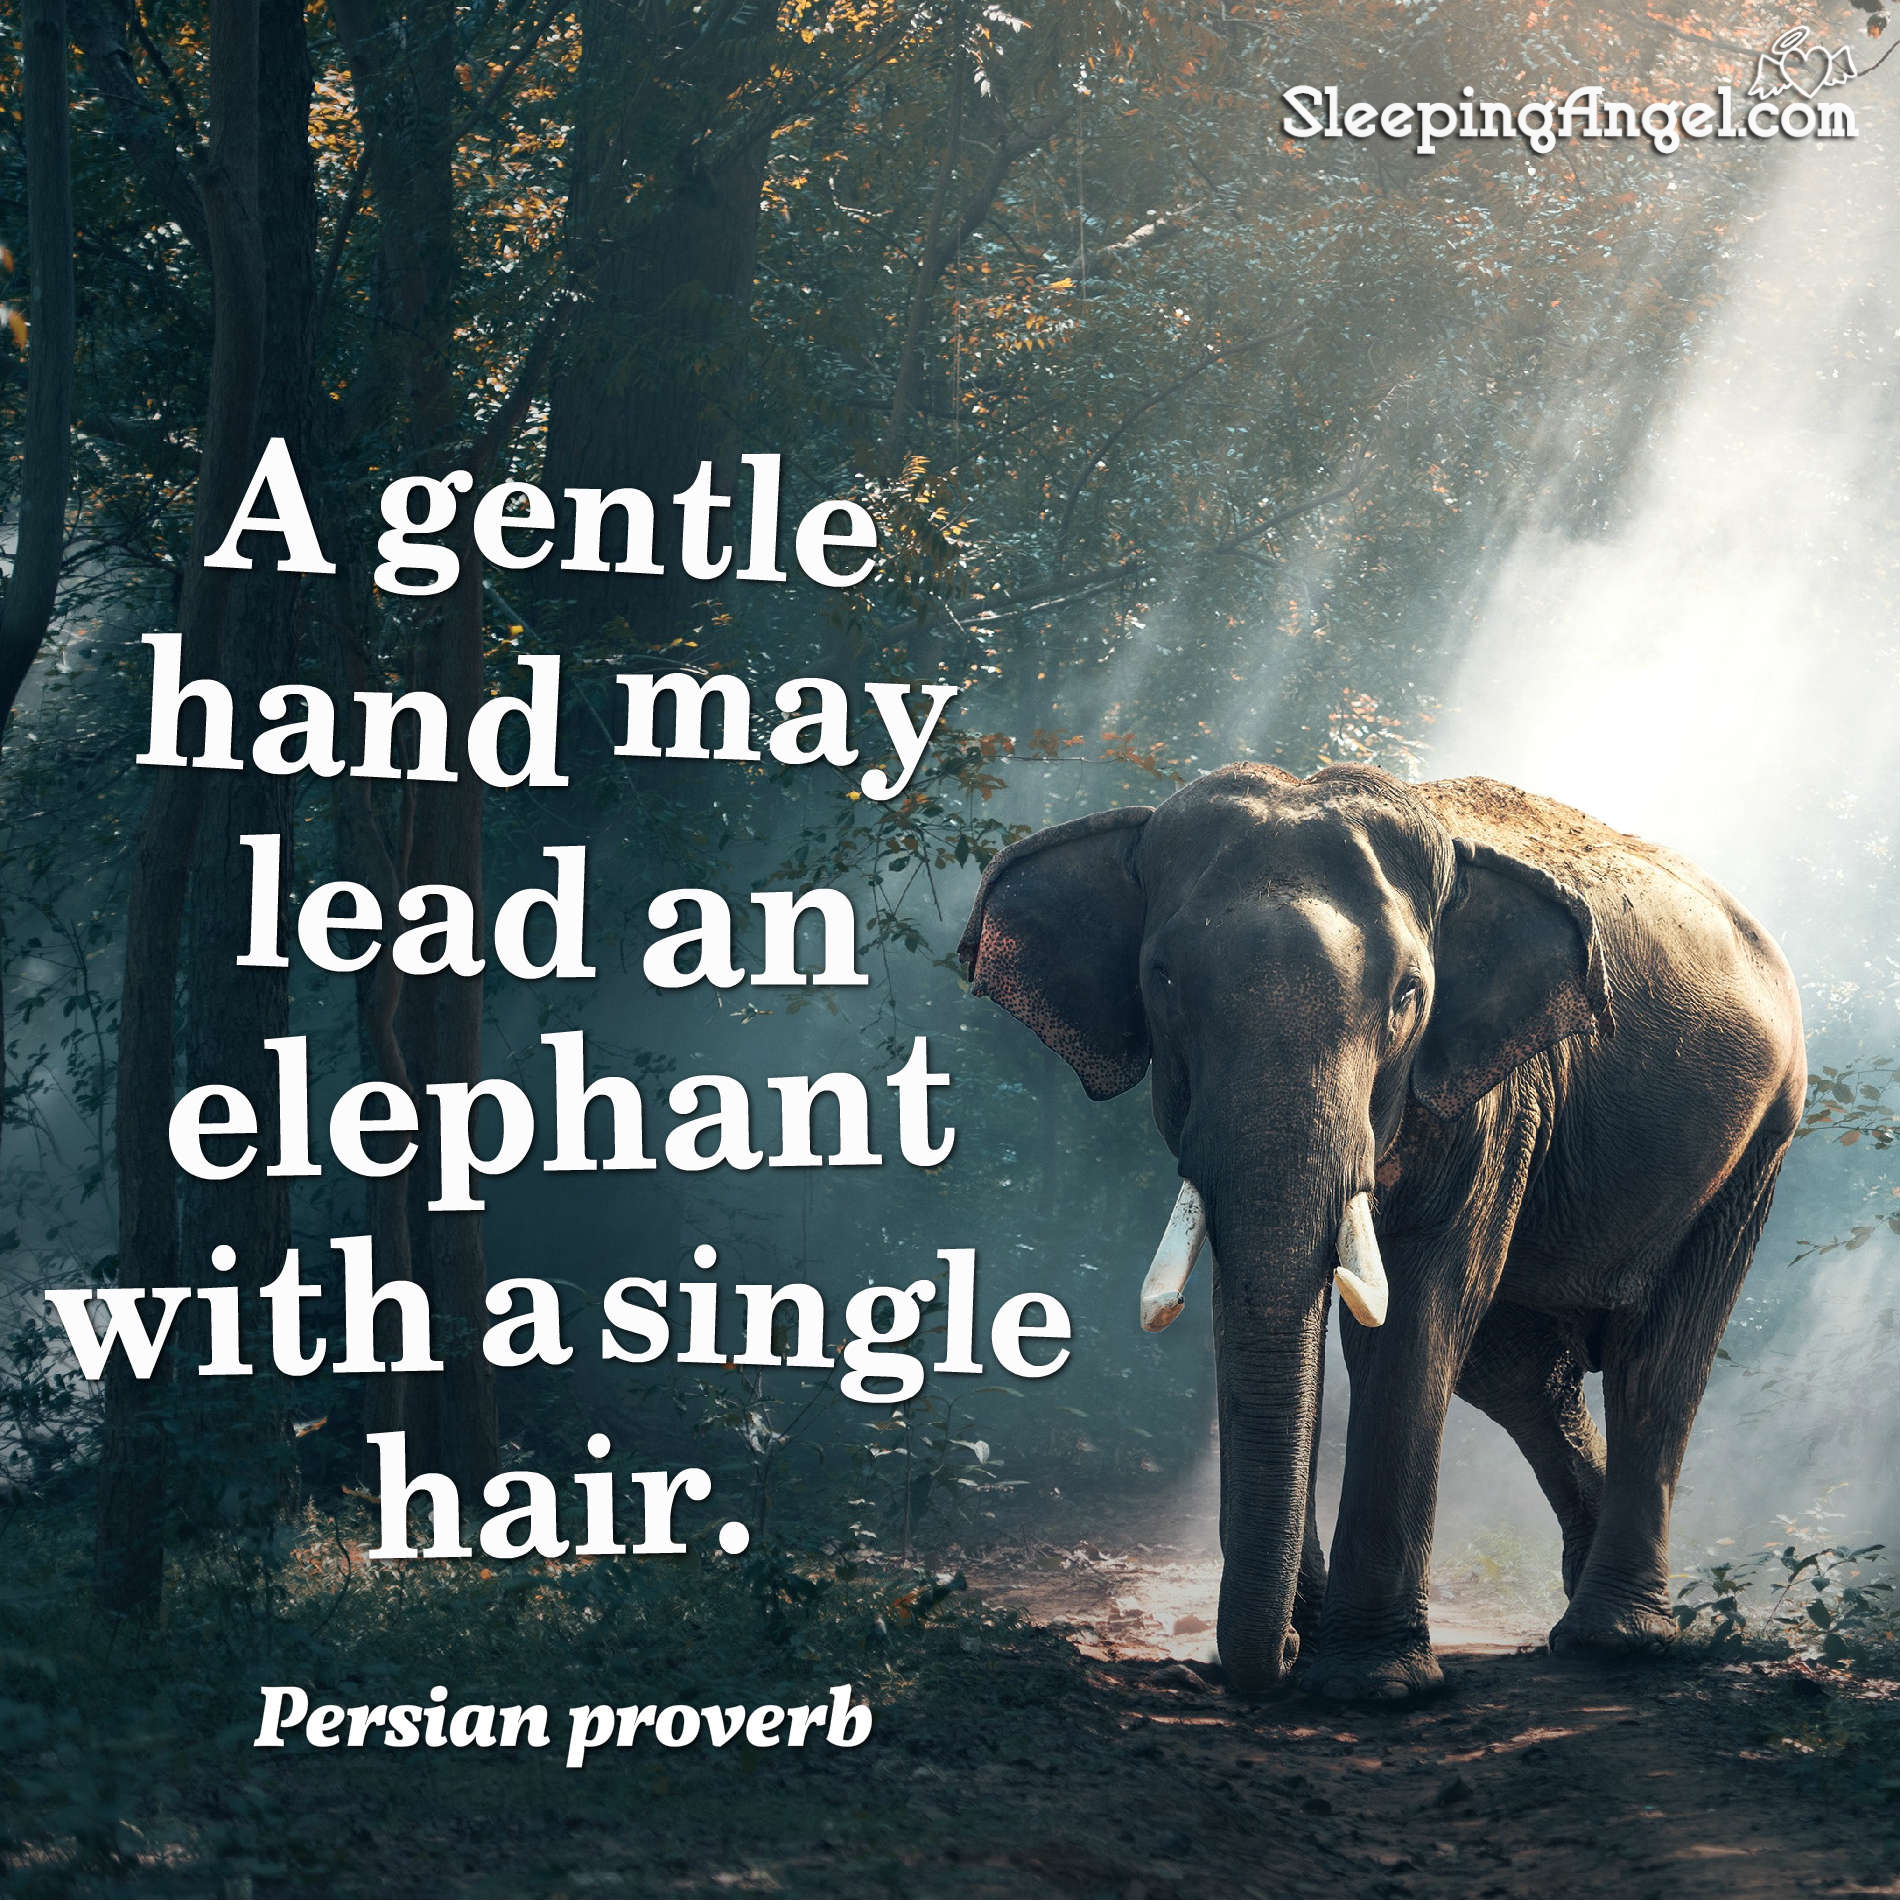 Persian Proverb